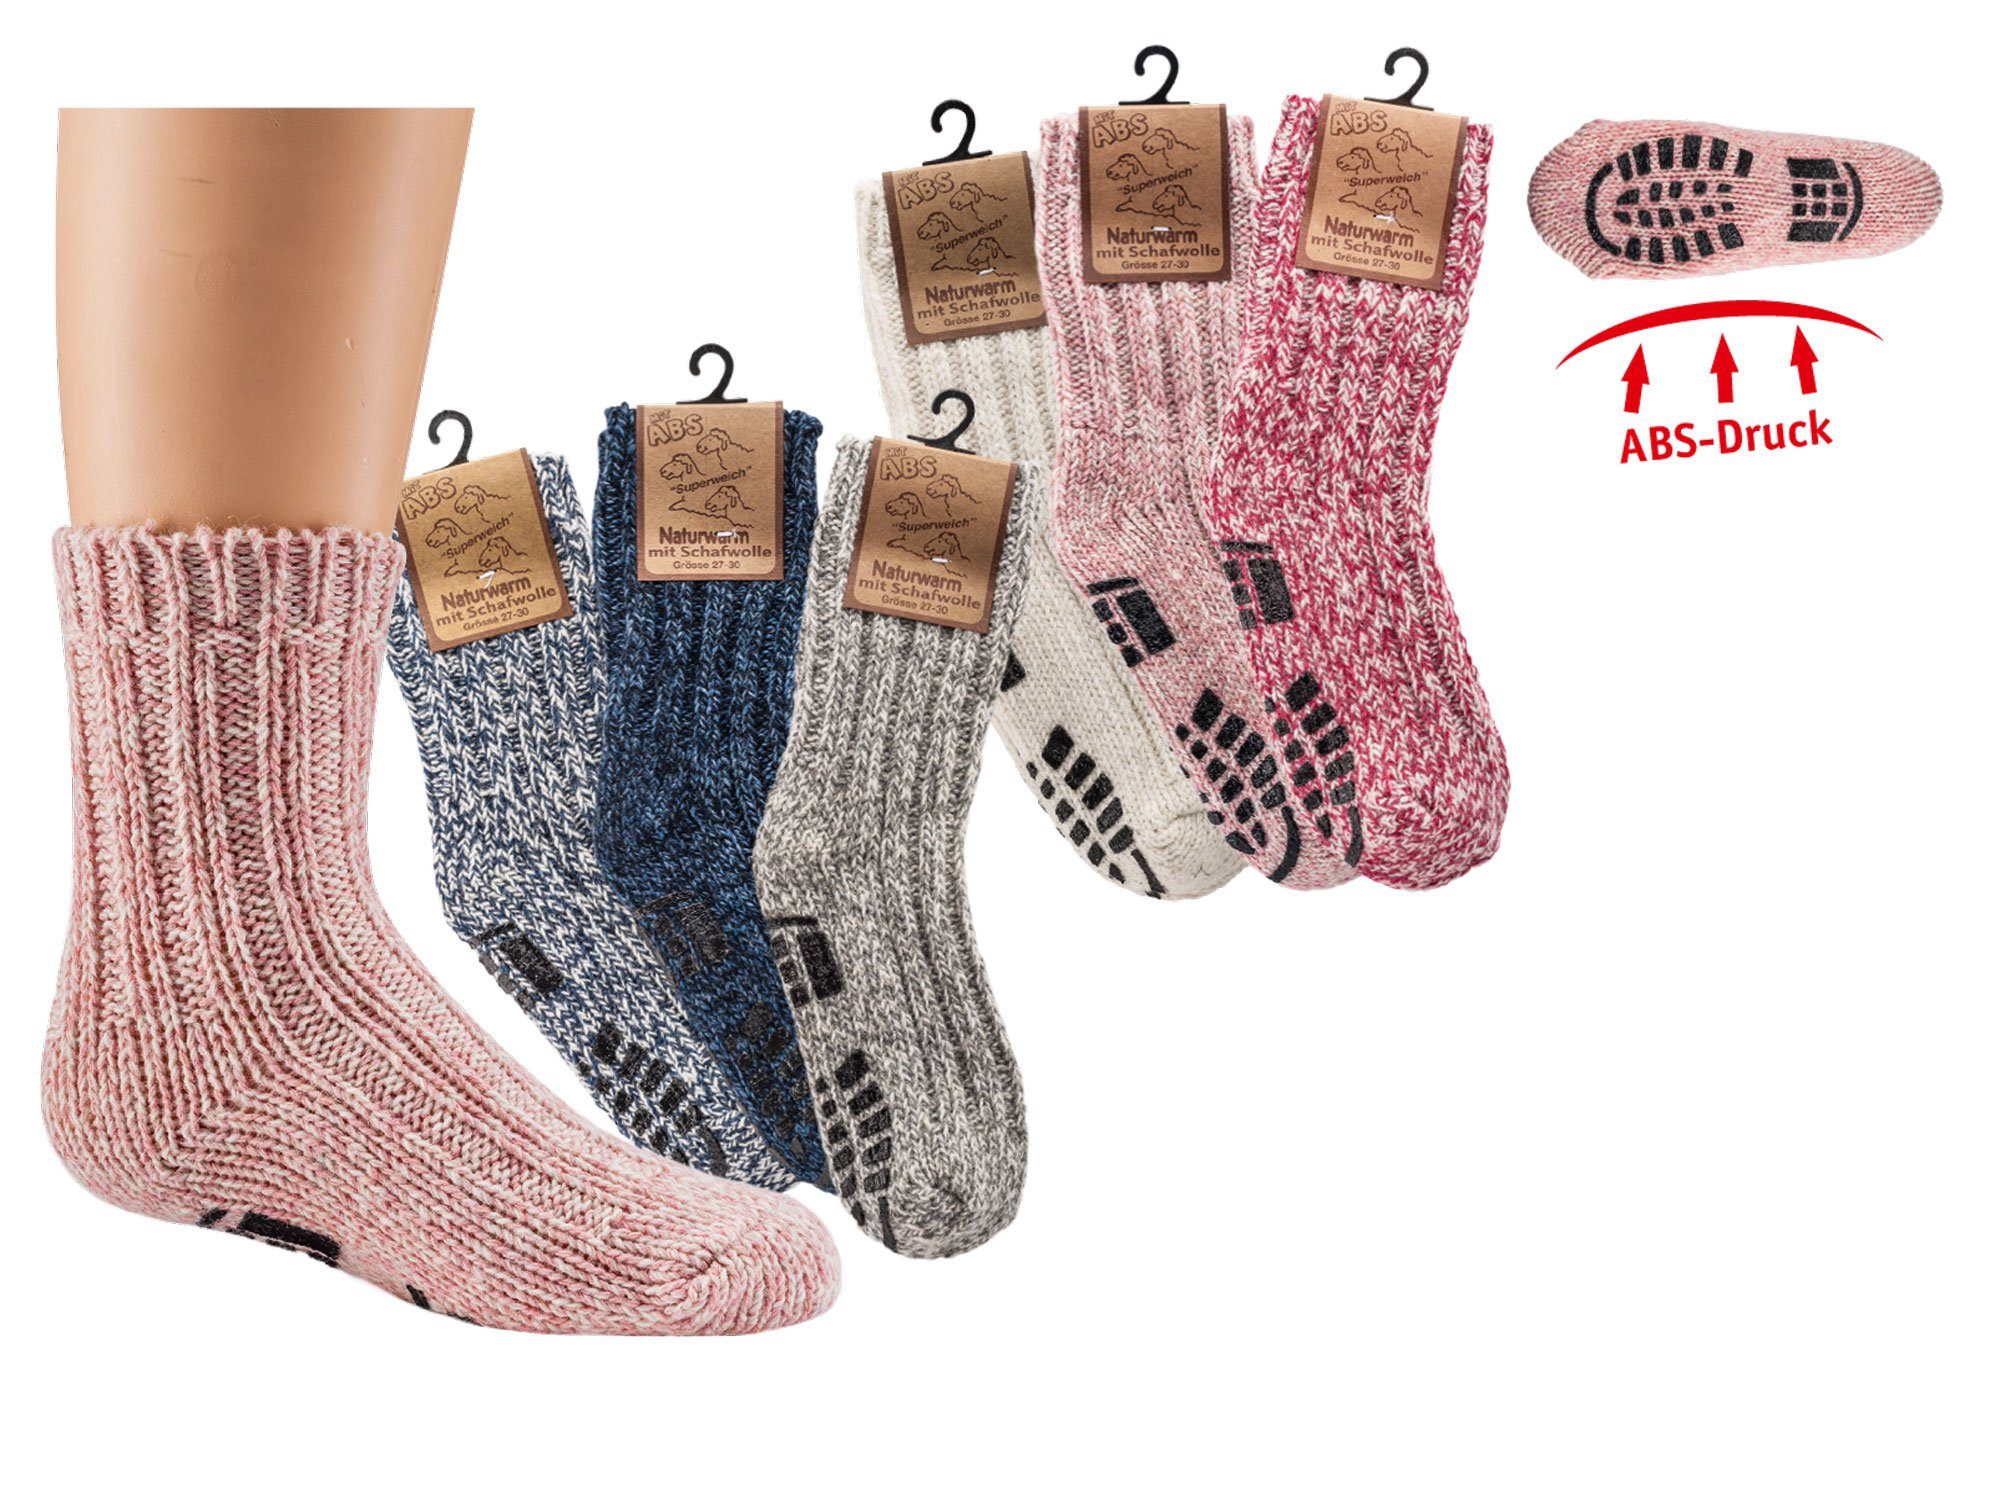 ABS Kinder für Paar ABS-Socken 3 Norwegersocken Babys & Wollweiß-Rosa-Rot-sortiert superweiche Stoppersocken 24 TippTexx